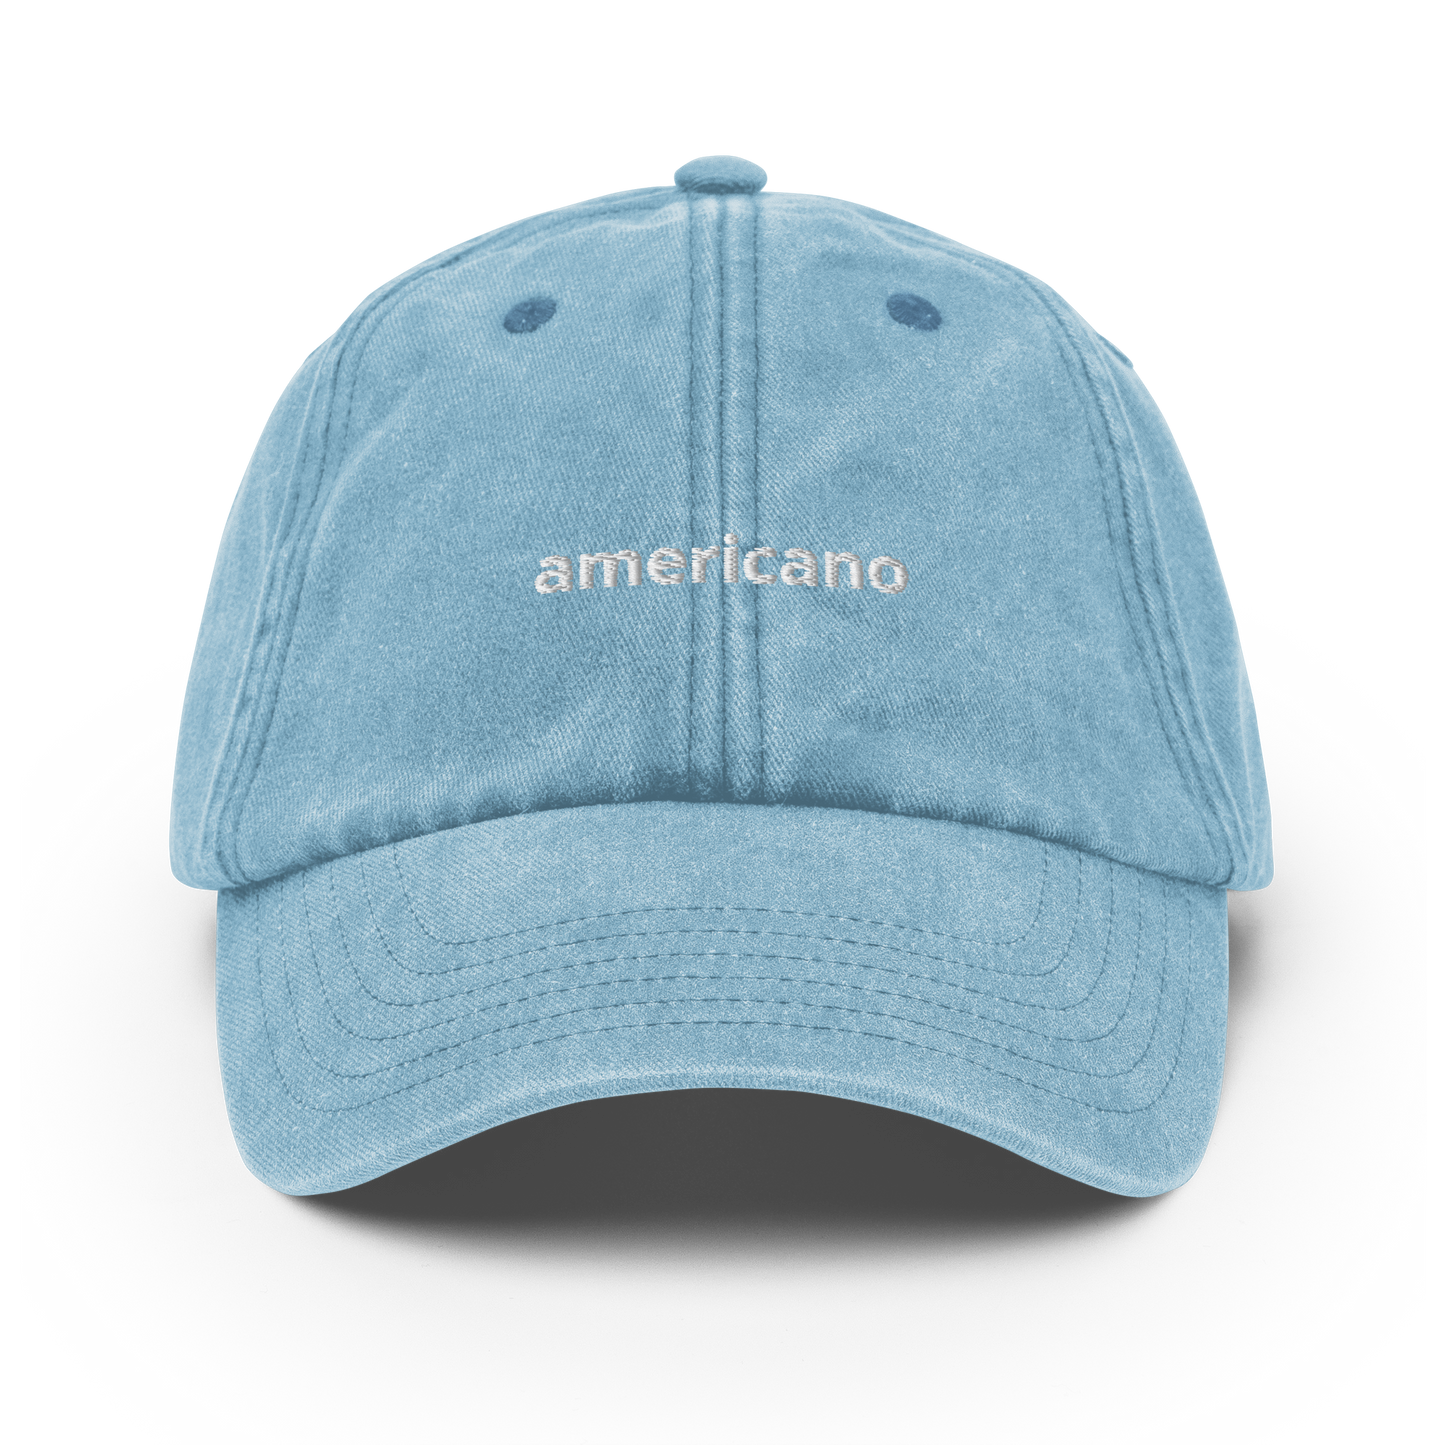 Americano - Vintage Hat